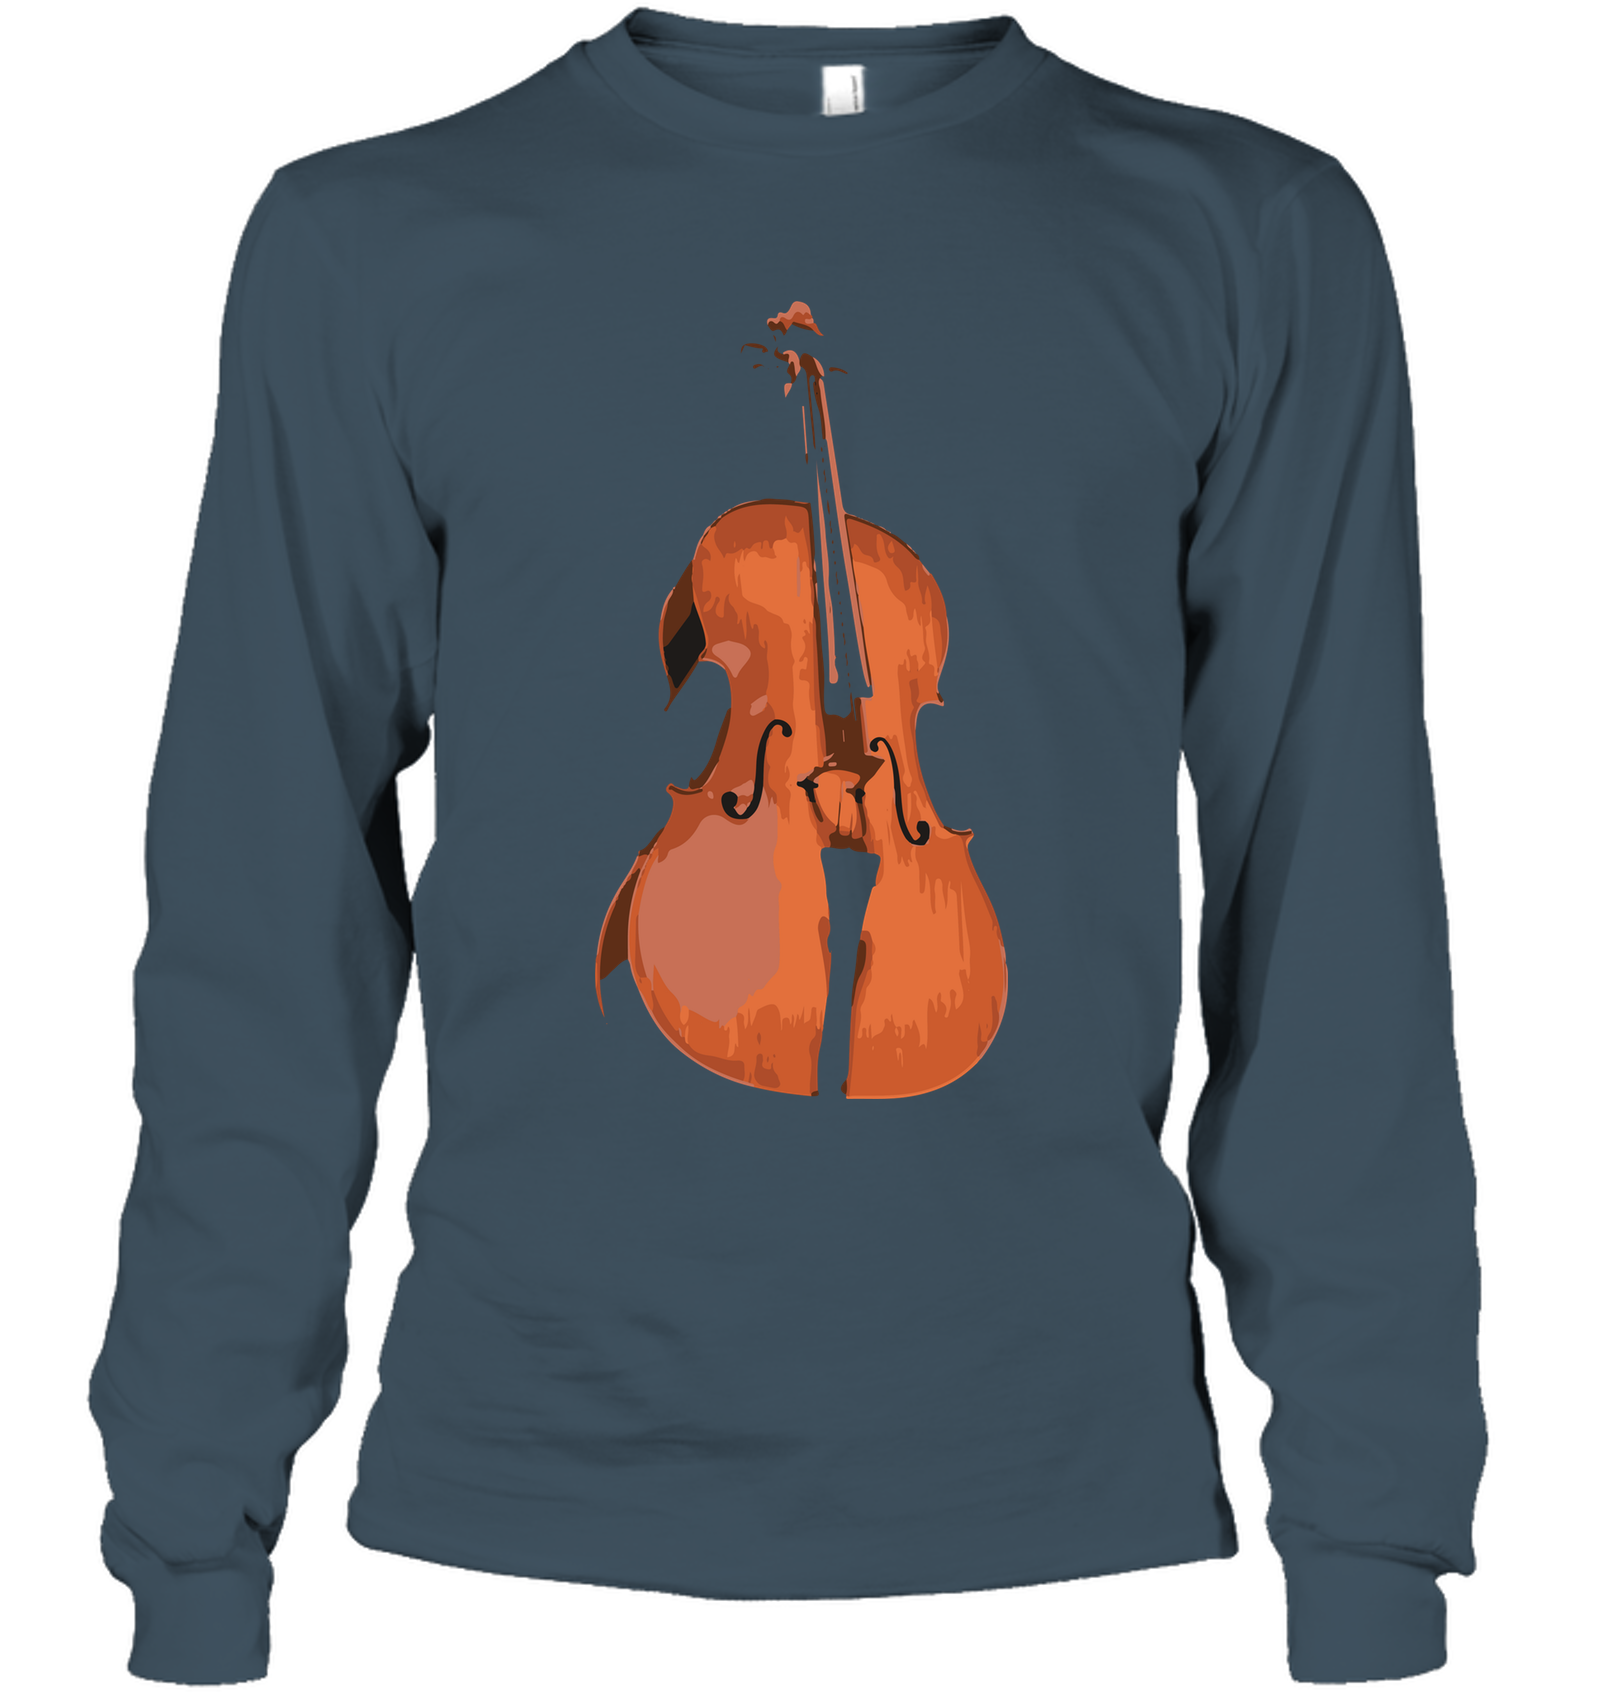 The Cello - Gildan Adult Classic Long Sleeve T-Shirt